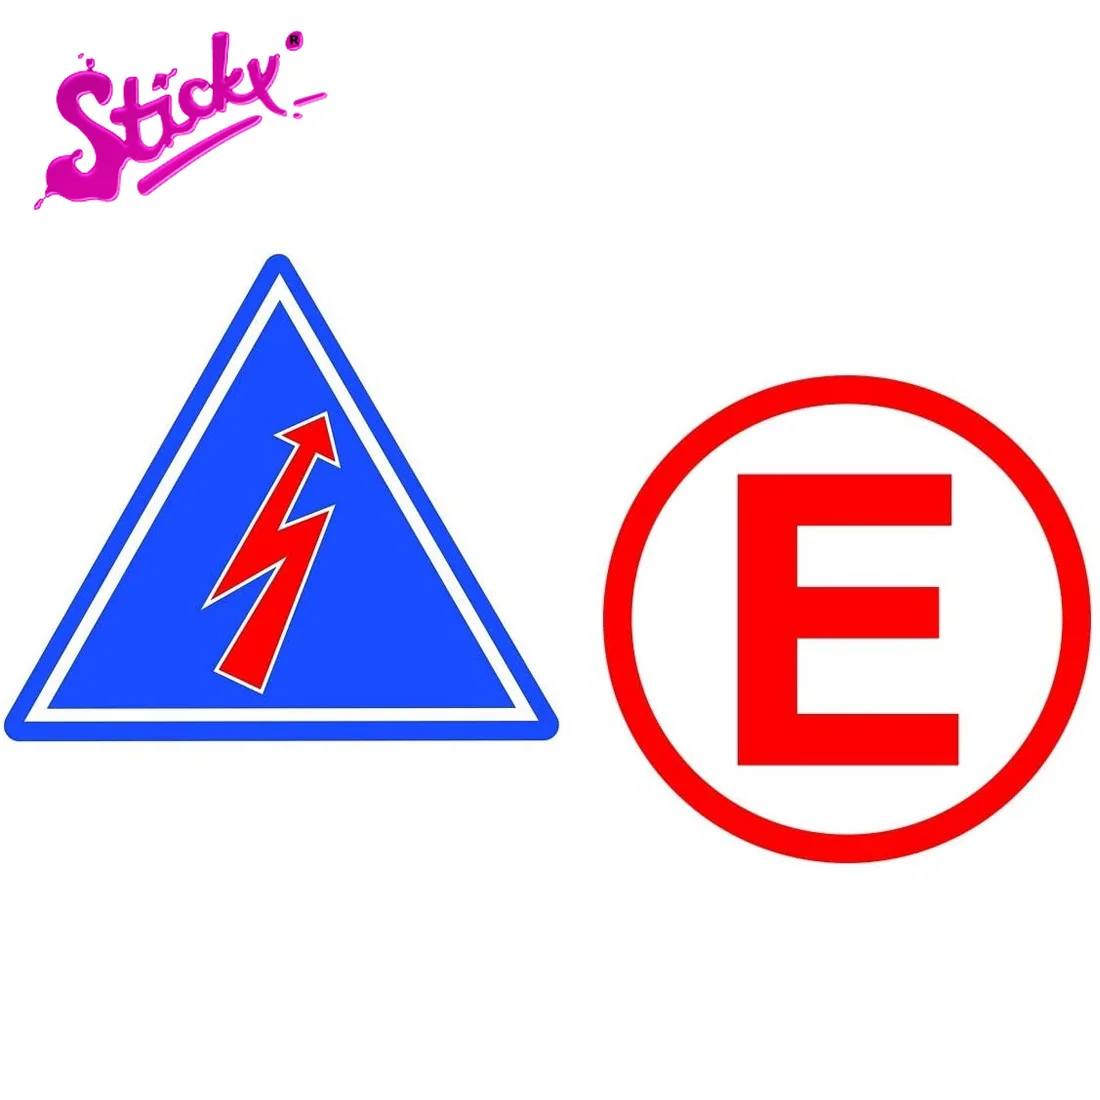 

STICKY Racing Stickers E Electric Arrow Emergency Racing Racing Car Motorsport Sticker Tuning Race Rally